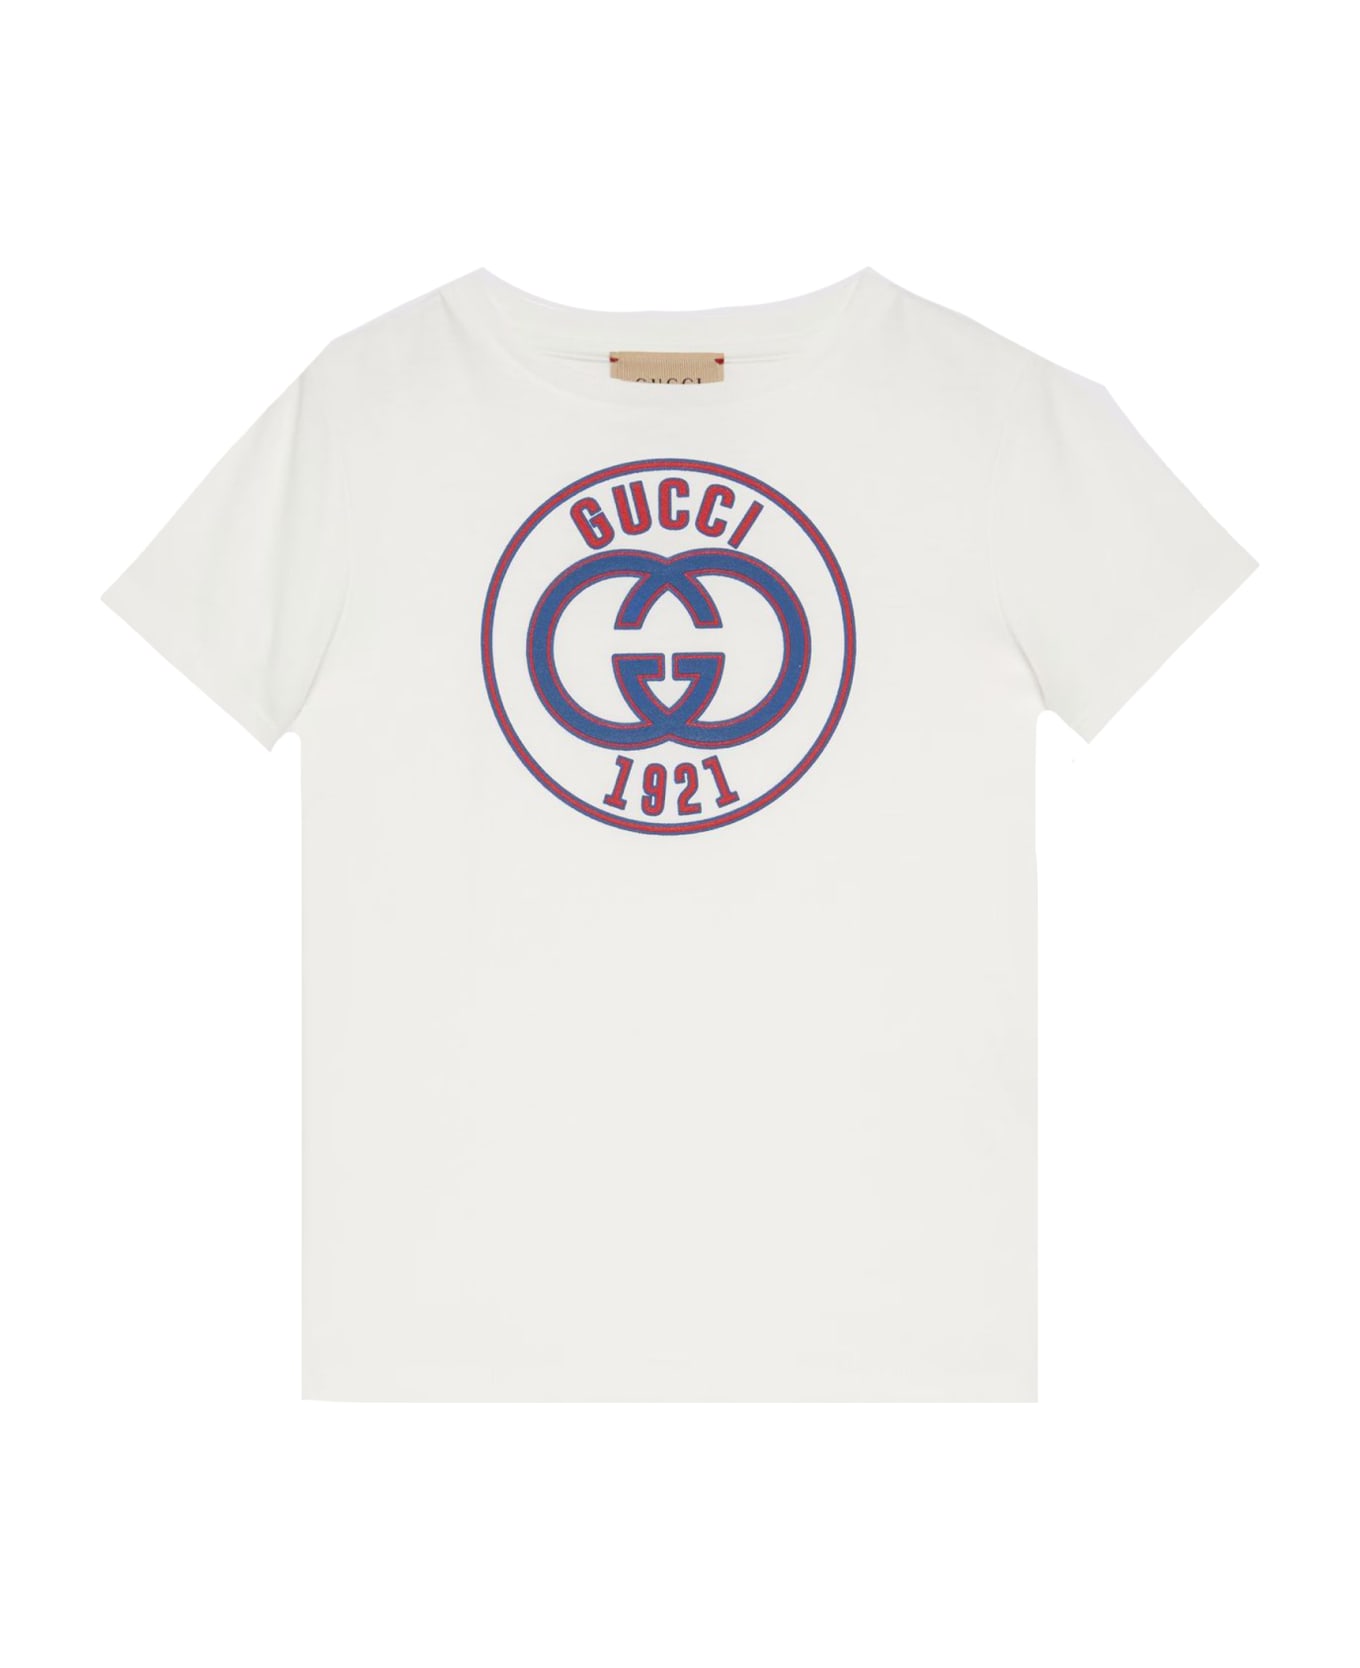 Gucci Children's Printed Cotton Jersey T-shirt